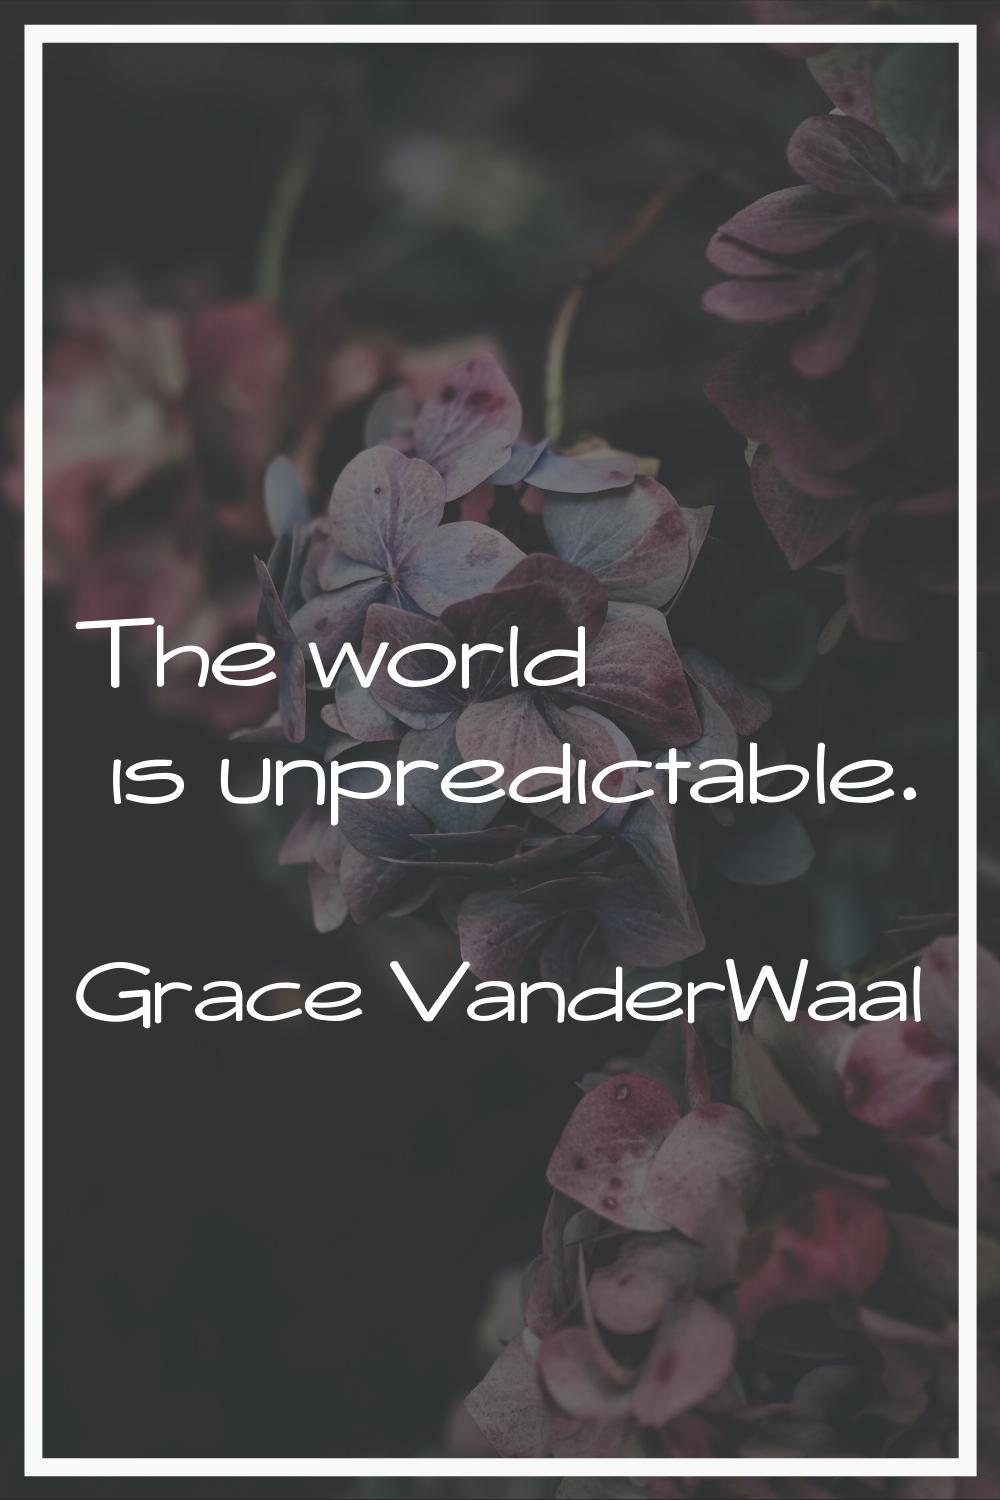 The world is unpredictable.